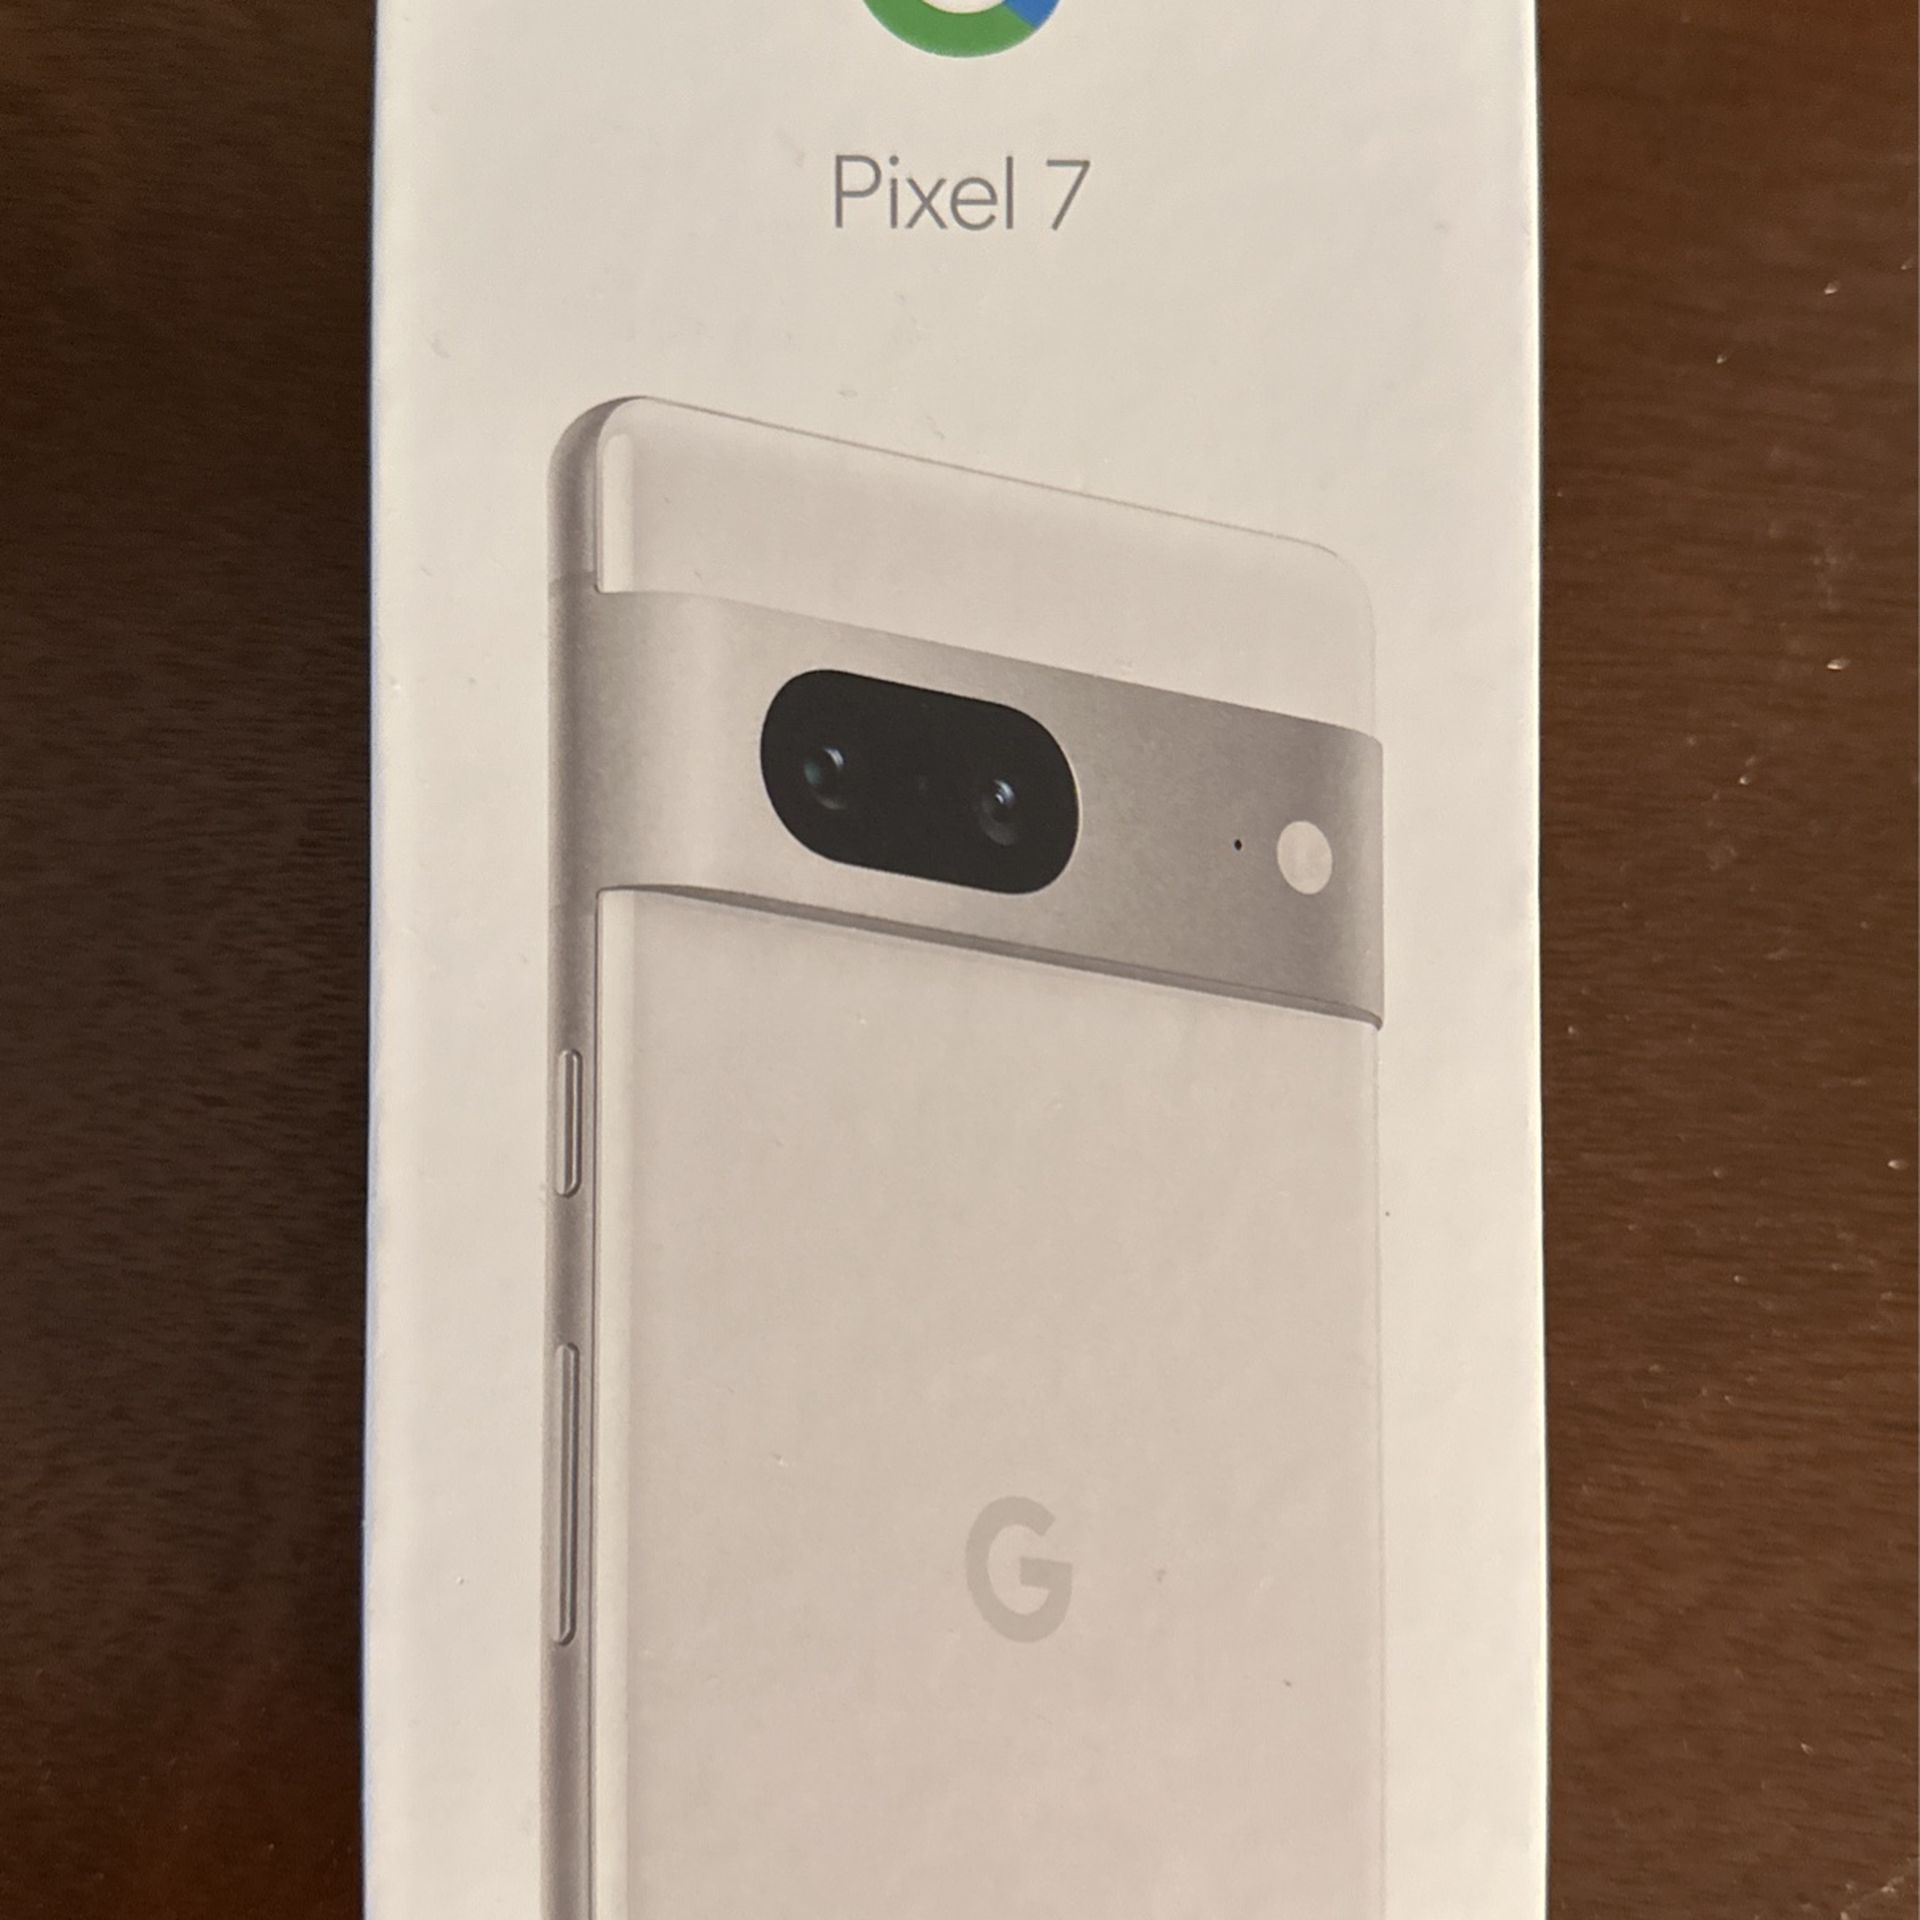 Unlocked White Google Pixel 7 Like New with box - Barely Used